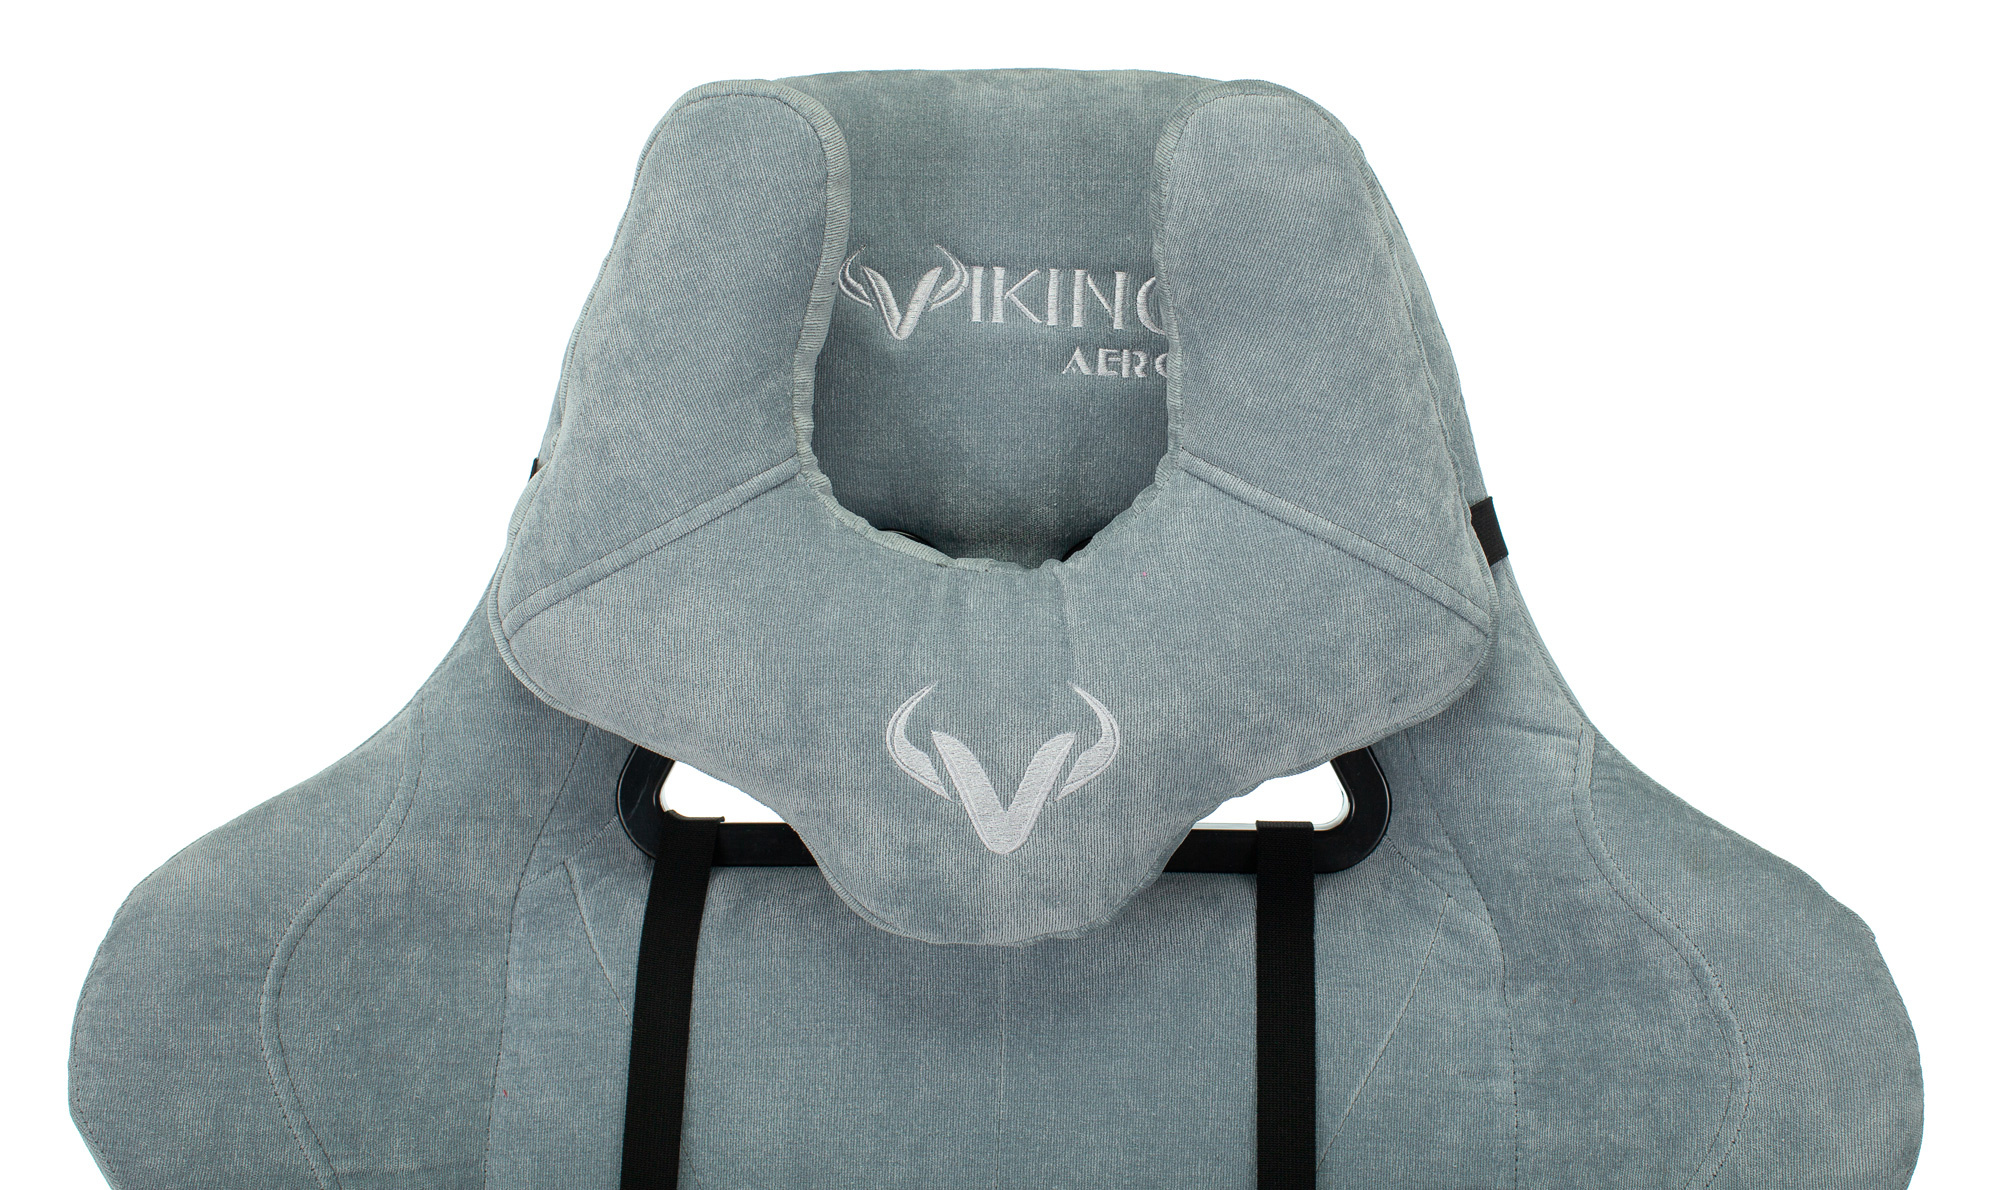 Кресло игровое Zombie VIKING KNIGHT, обивка: ткань, цвет: серо-голубой (VIKING KNIGHT LT28) от магазина Buro.store